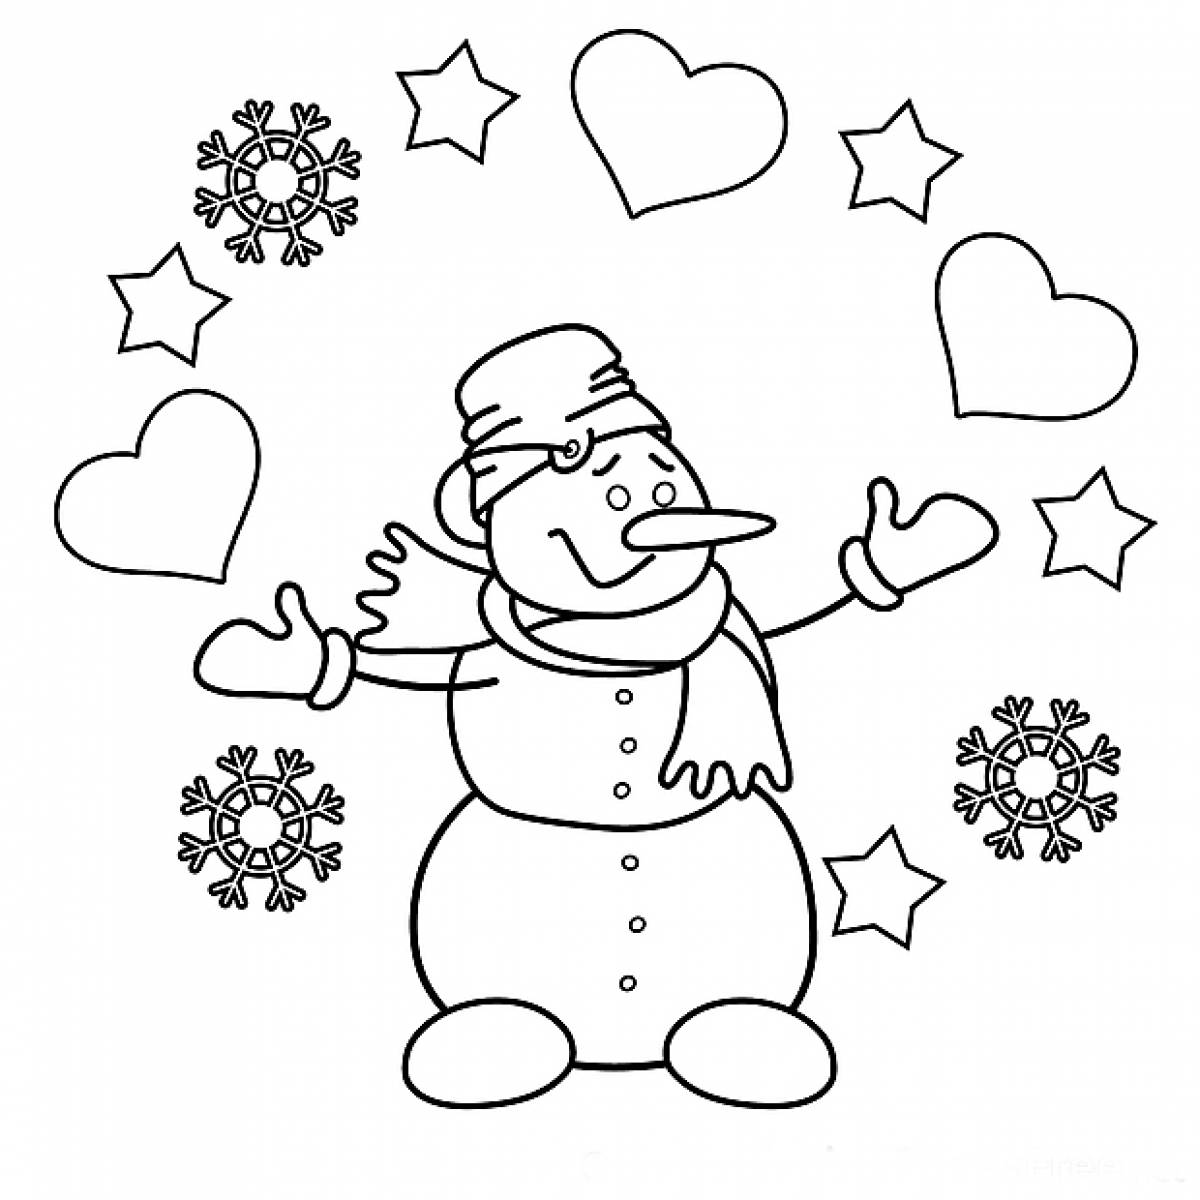 Snowman in hearts